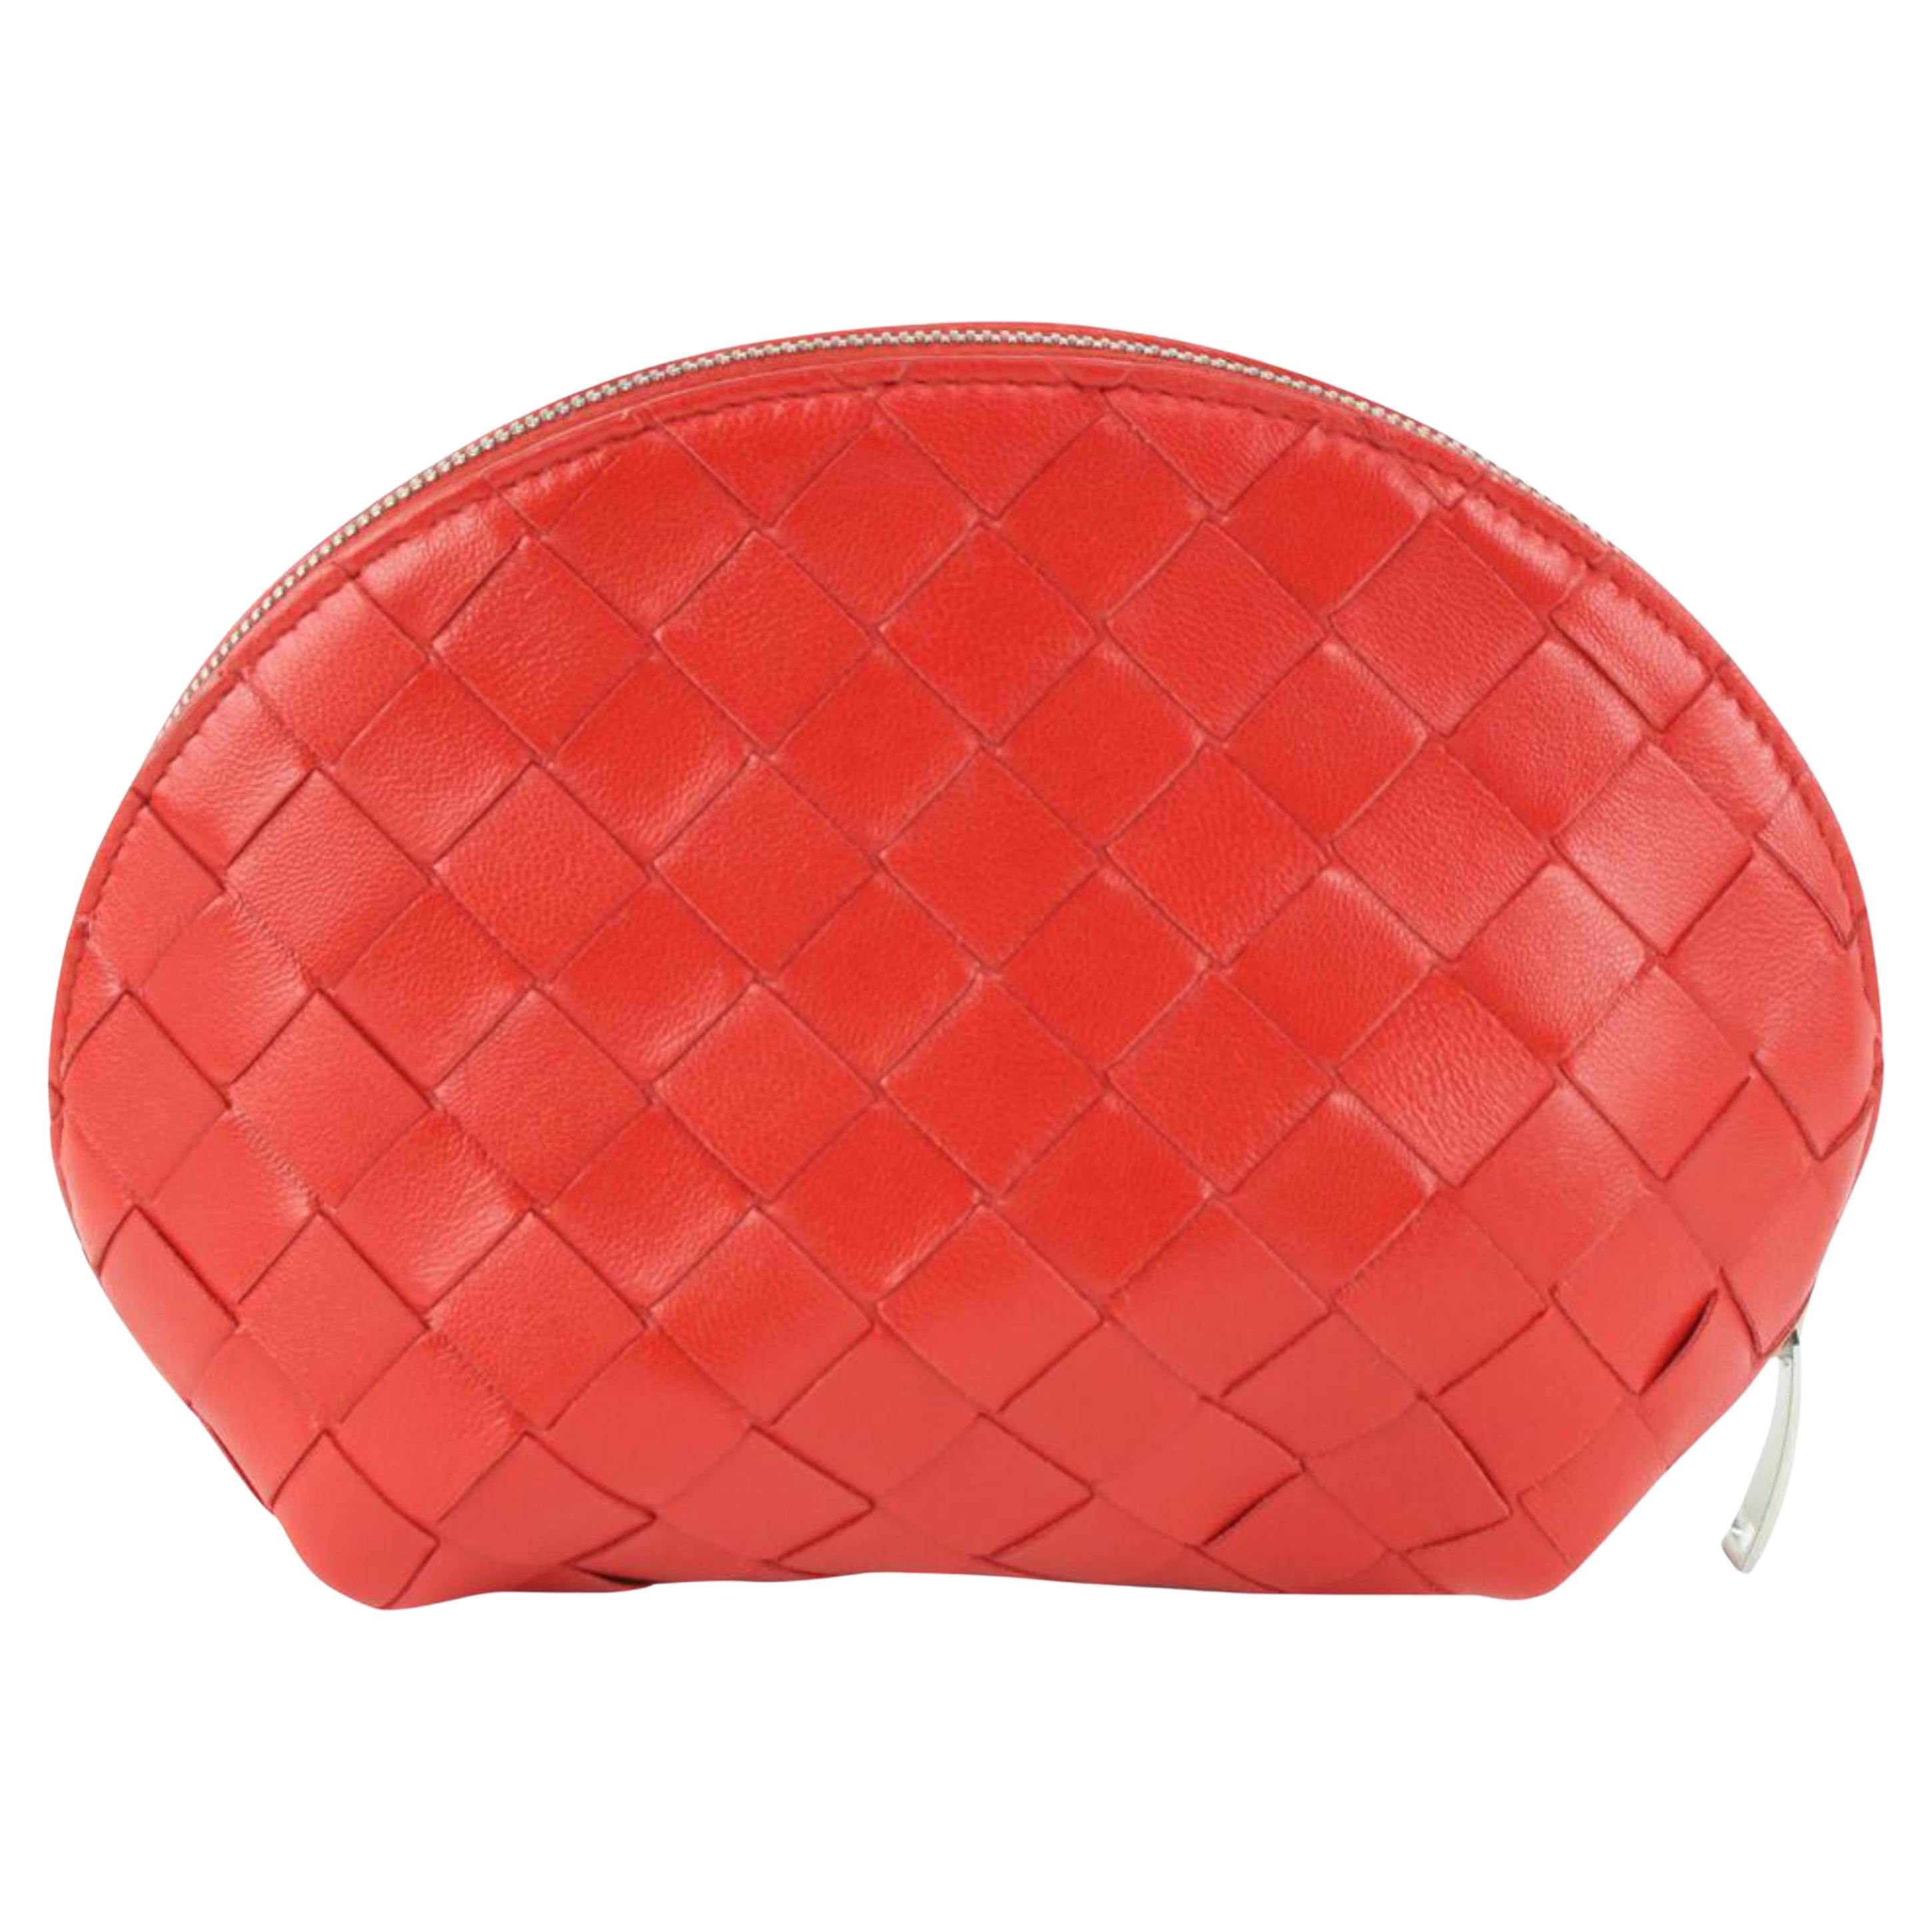 Bottega Veneta Red Intrecciato Leather Oval Cosmetic Pouch Toiletry Case 1123bv3 For Sale